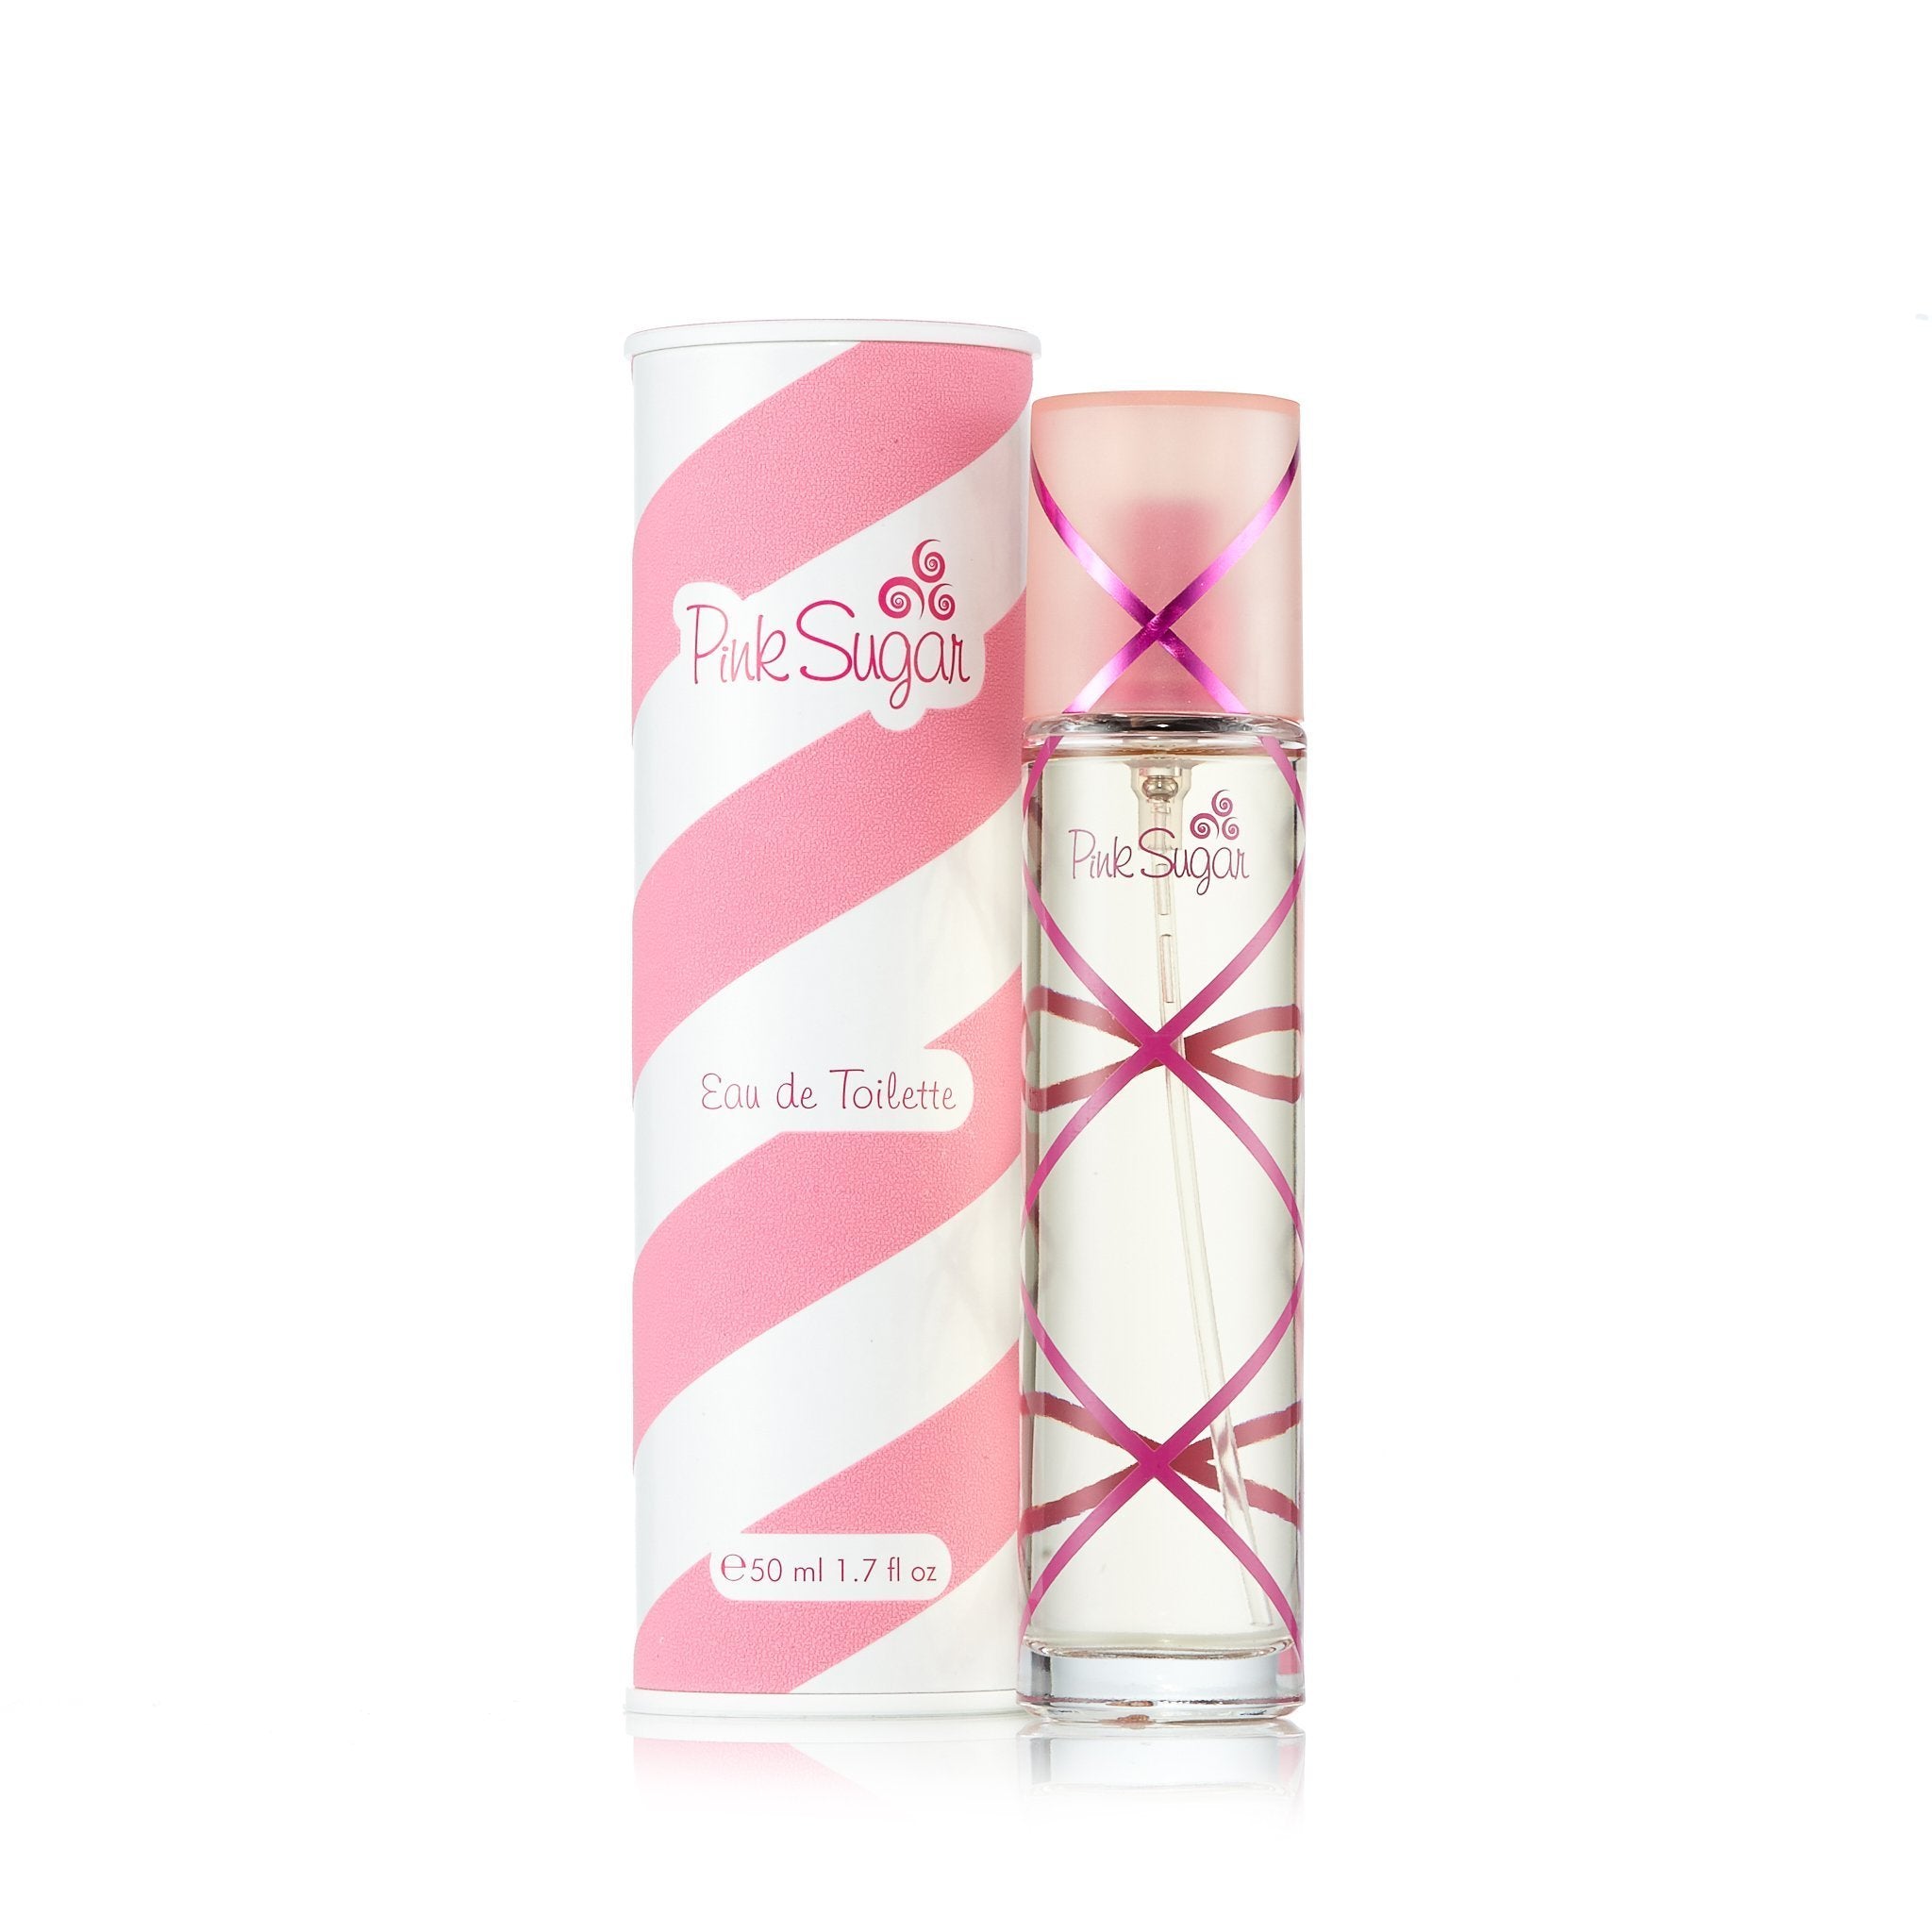 Pink Sugar by Aquolina for Women - 1.7 oz EDT Spray, 1.7 oz - Kroger